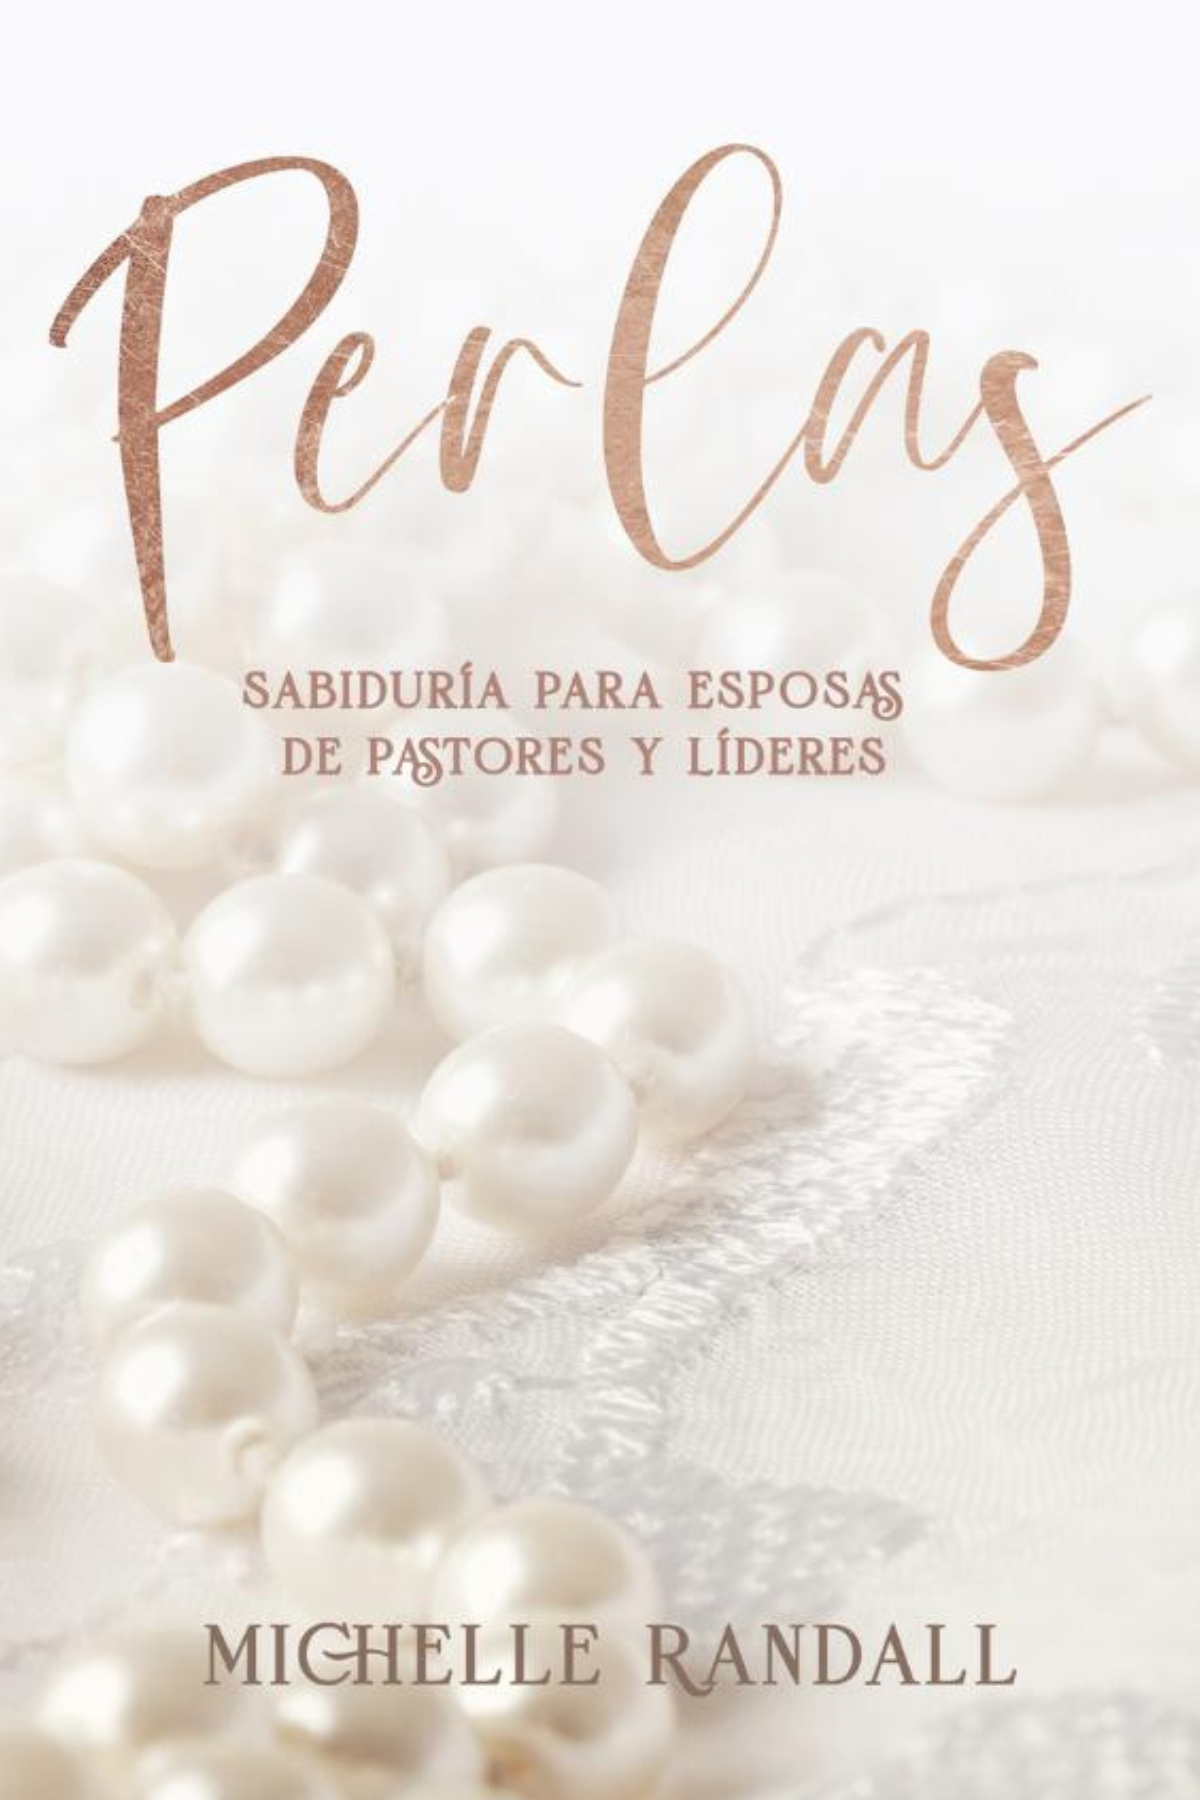 Perlas, Spanish Edition